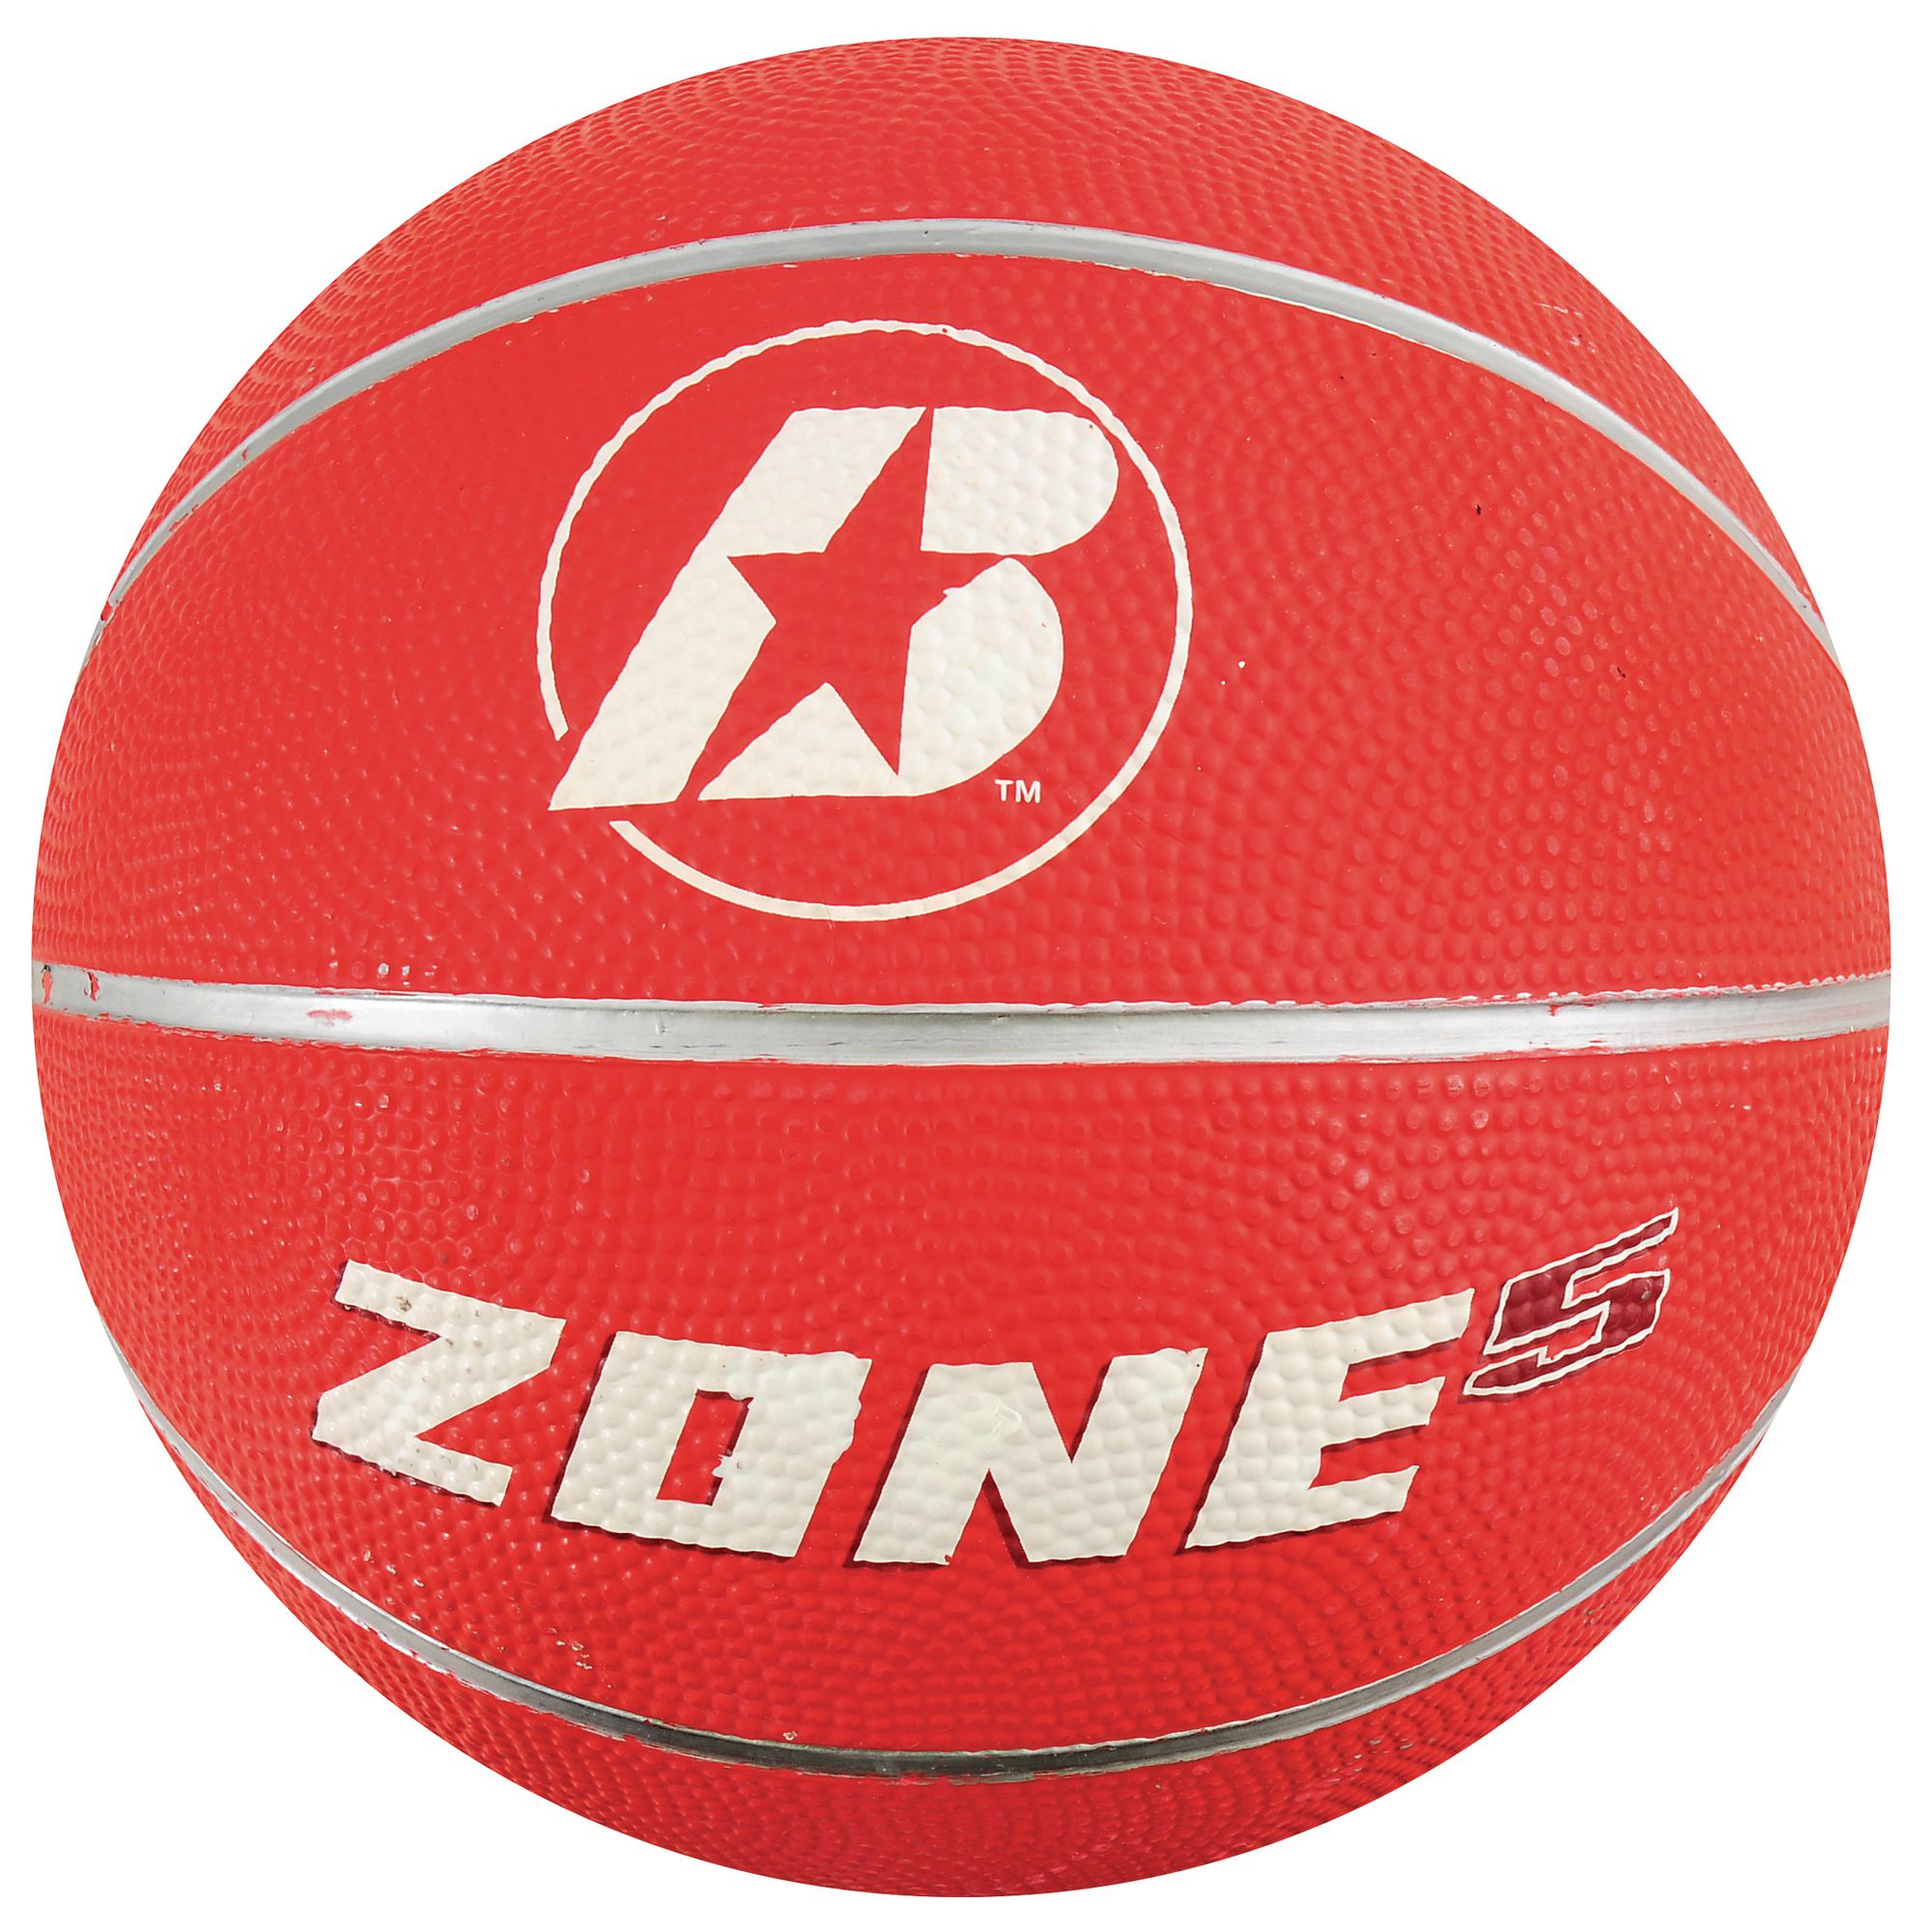 B?íden Zone Basketball - Red - Size 5